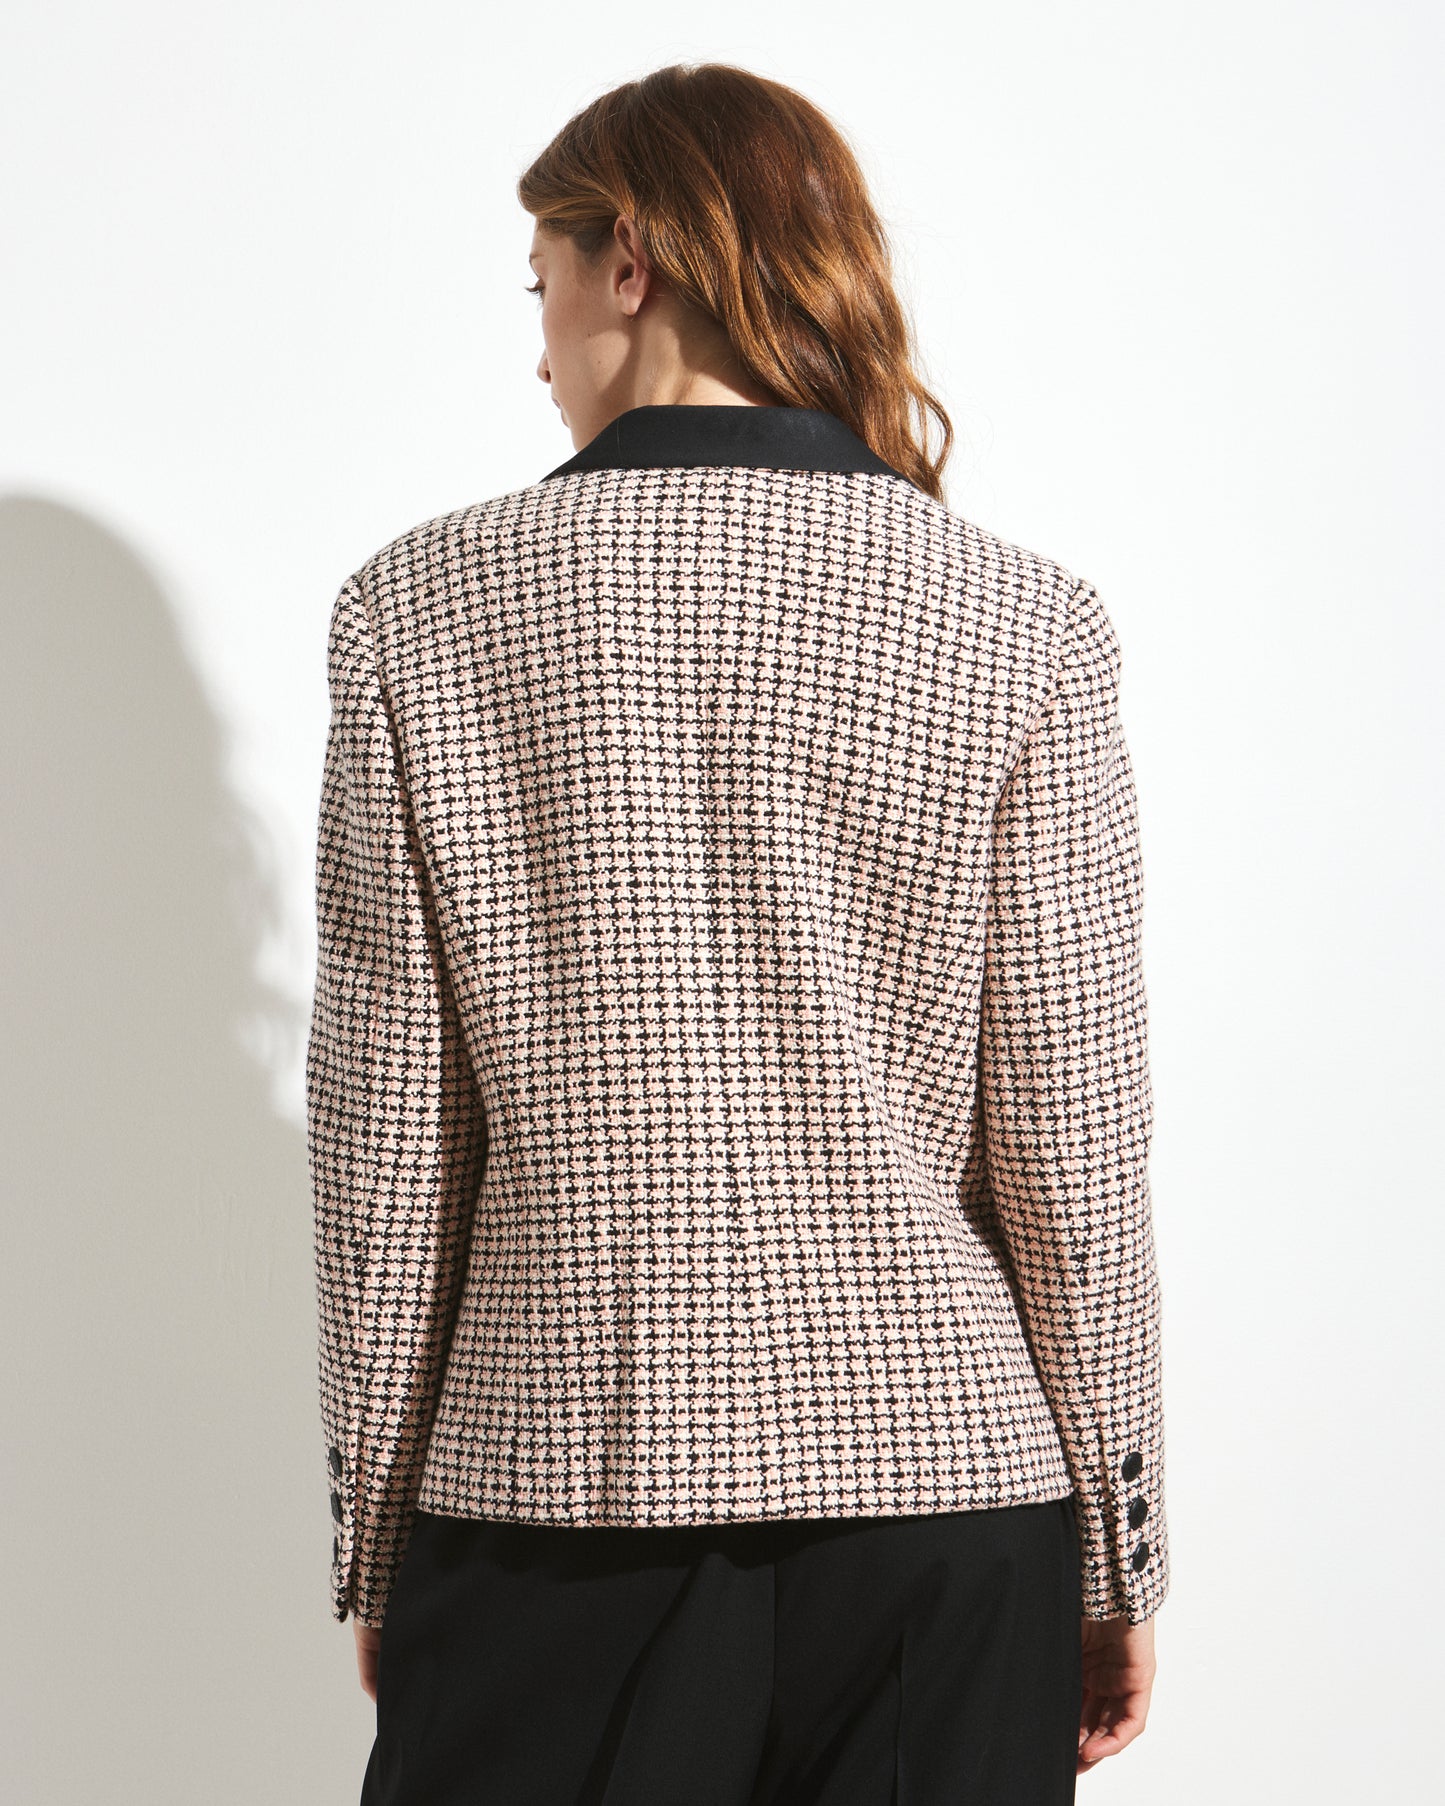 Chanel Spring 2002 Tweed Blazer with Built-in Vest